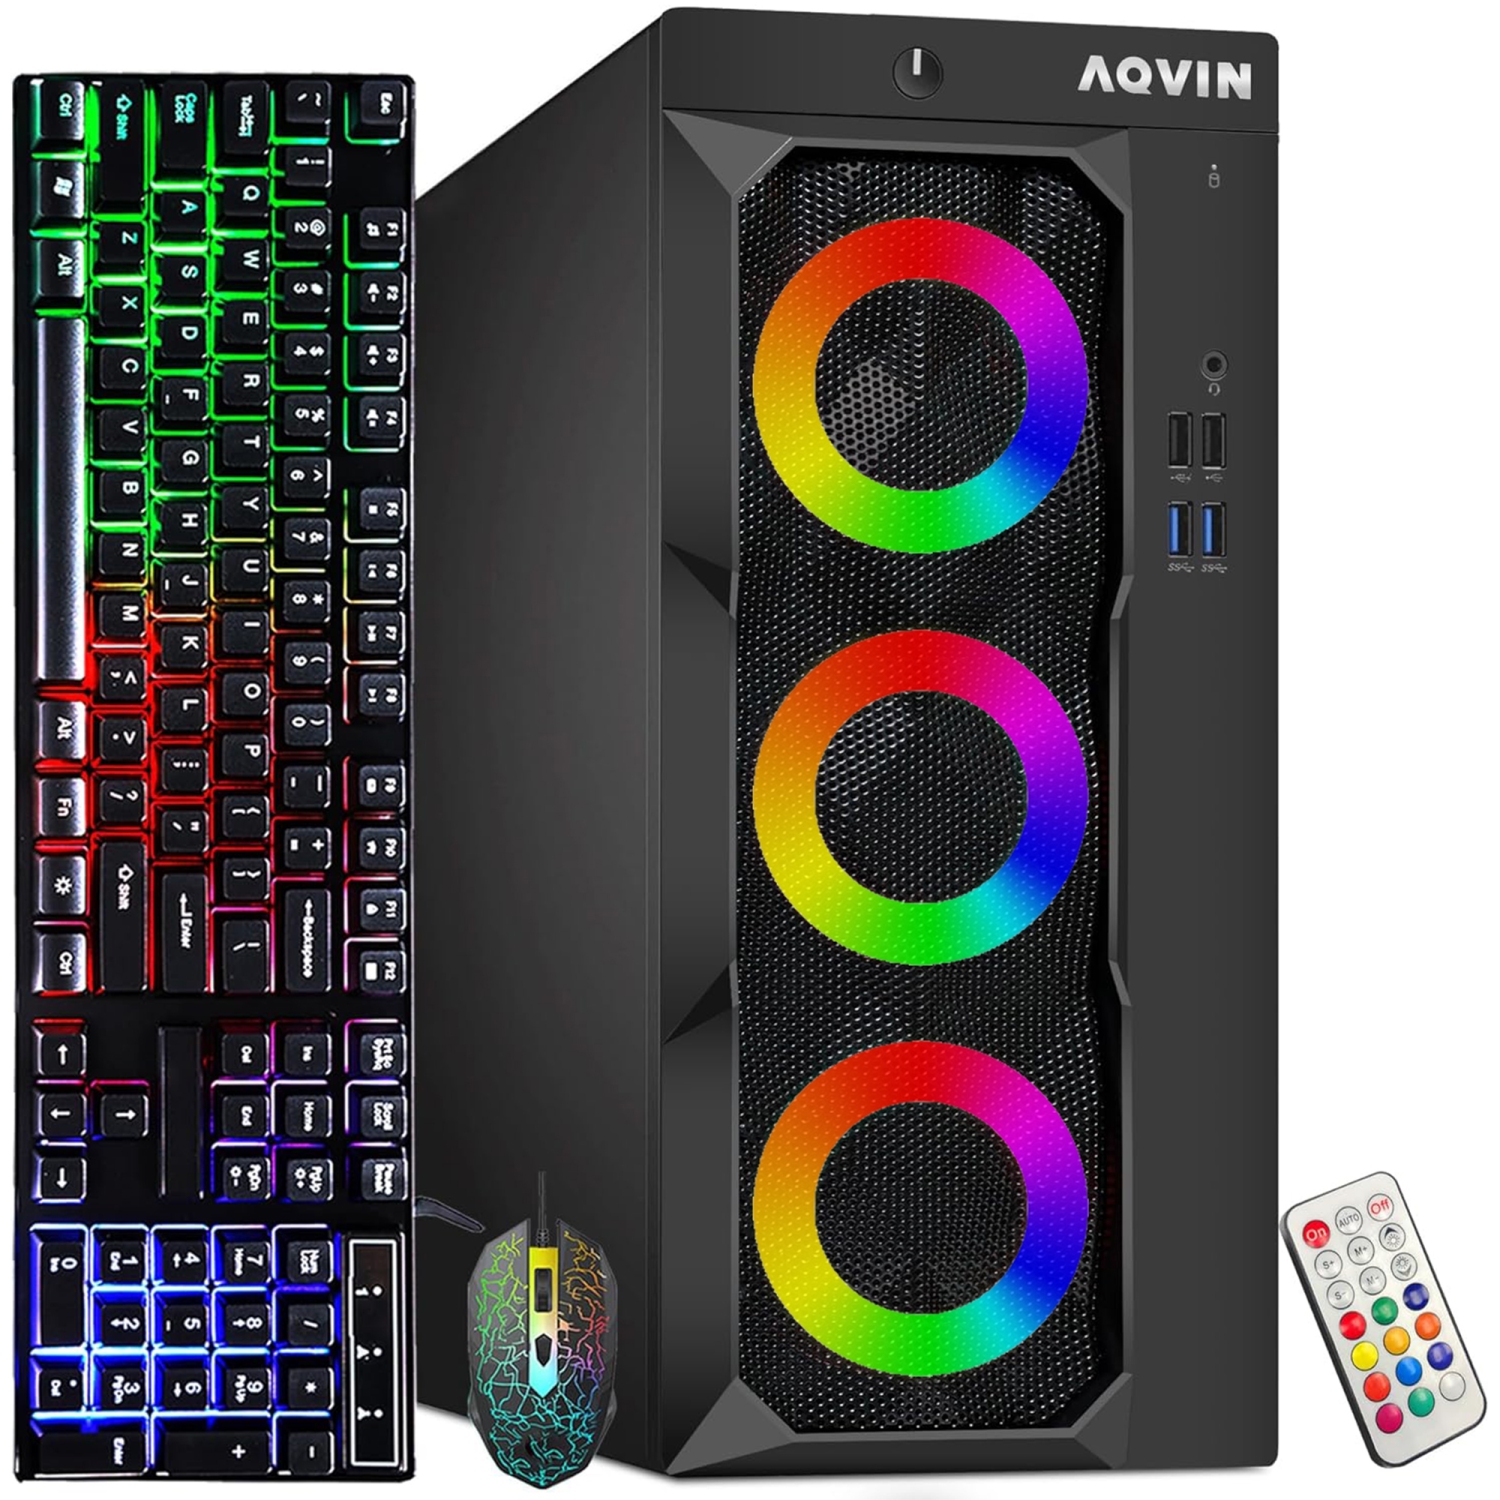 Refurbished (Excellent) - AQVIN LuminaRings Gaming Desktop Computer PC Tower - Black (Intel Core i7 processor/ 32GB DDR4 RAM/ 2TB SSD/ AMD RX 550 Graphics Card/ Windows 10 Pro)WIFI